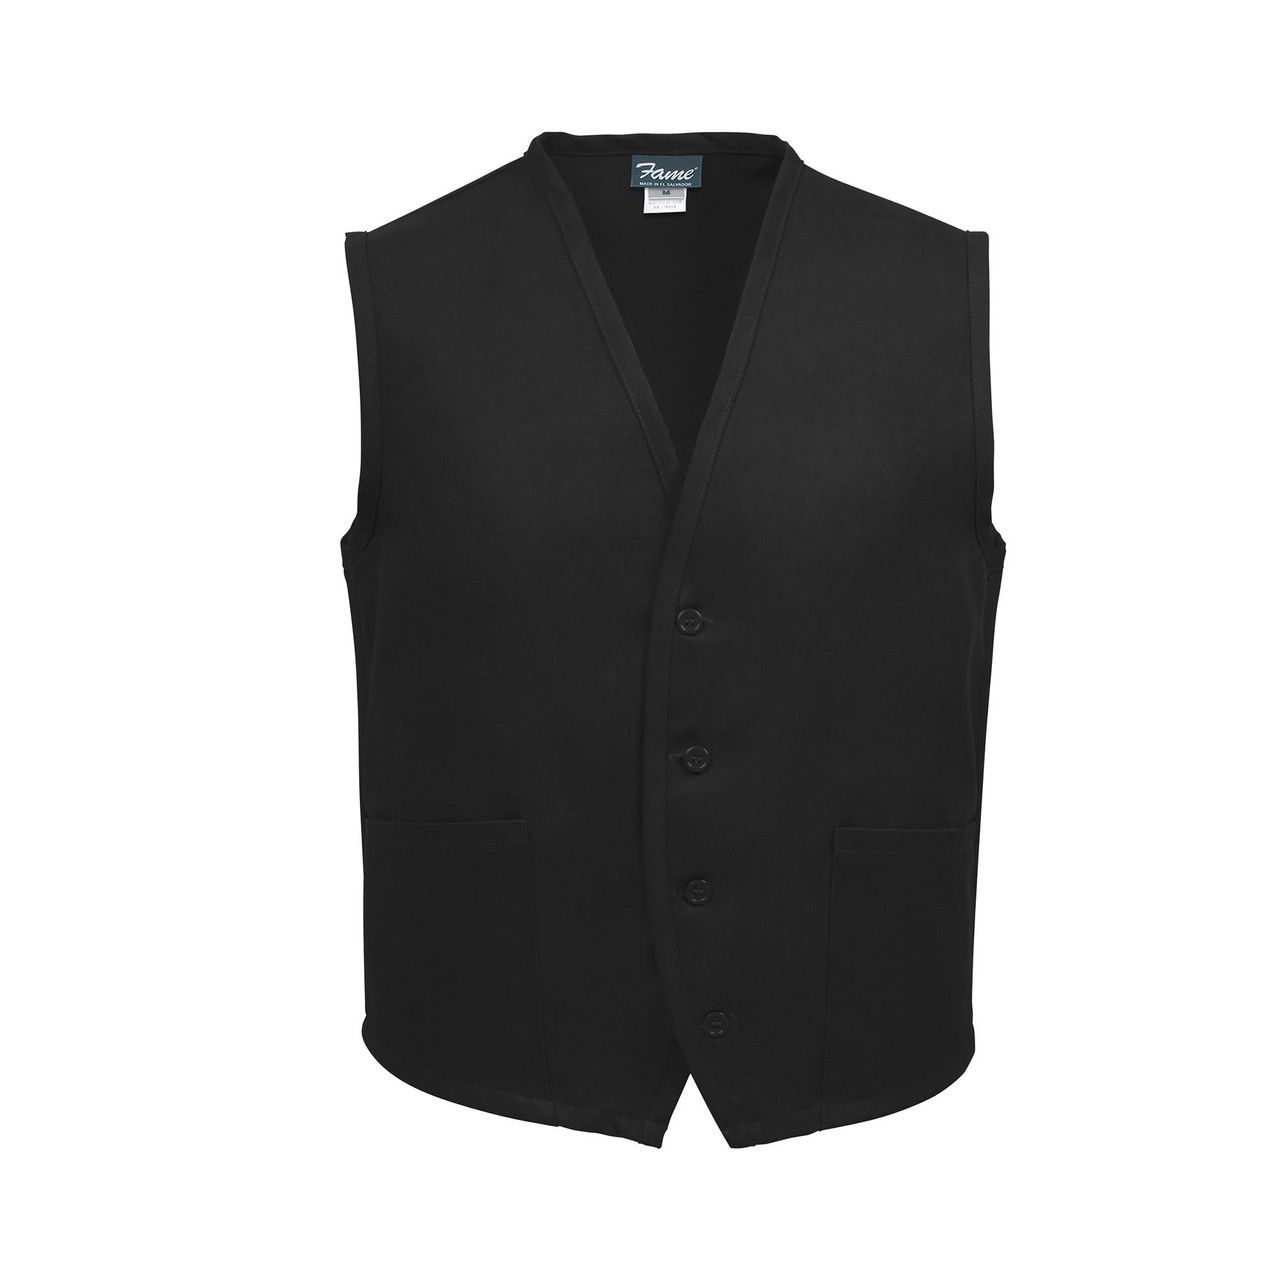 Can anyone wear the Professional Unisex Black Uniform Vest?